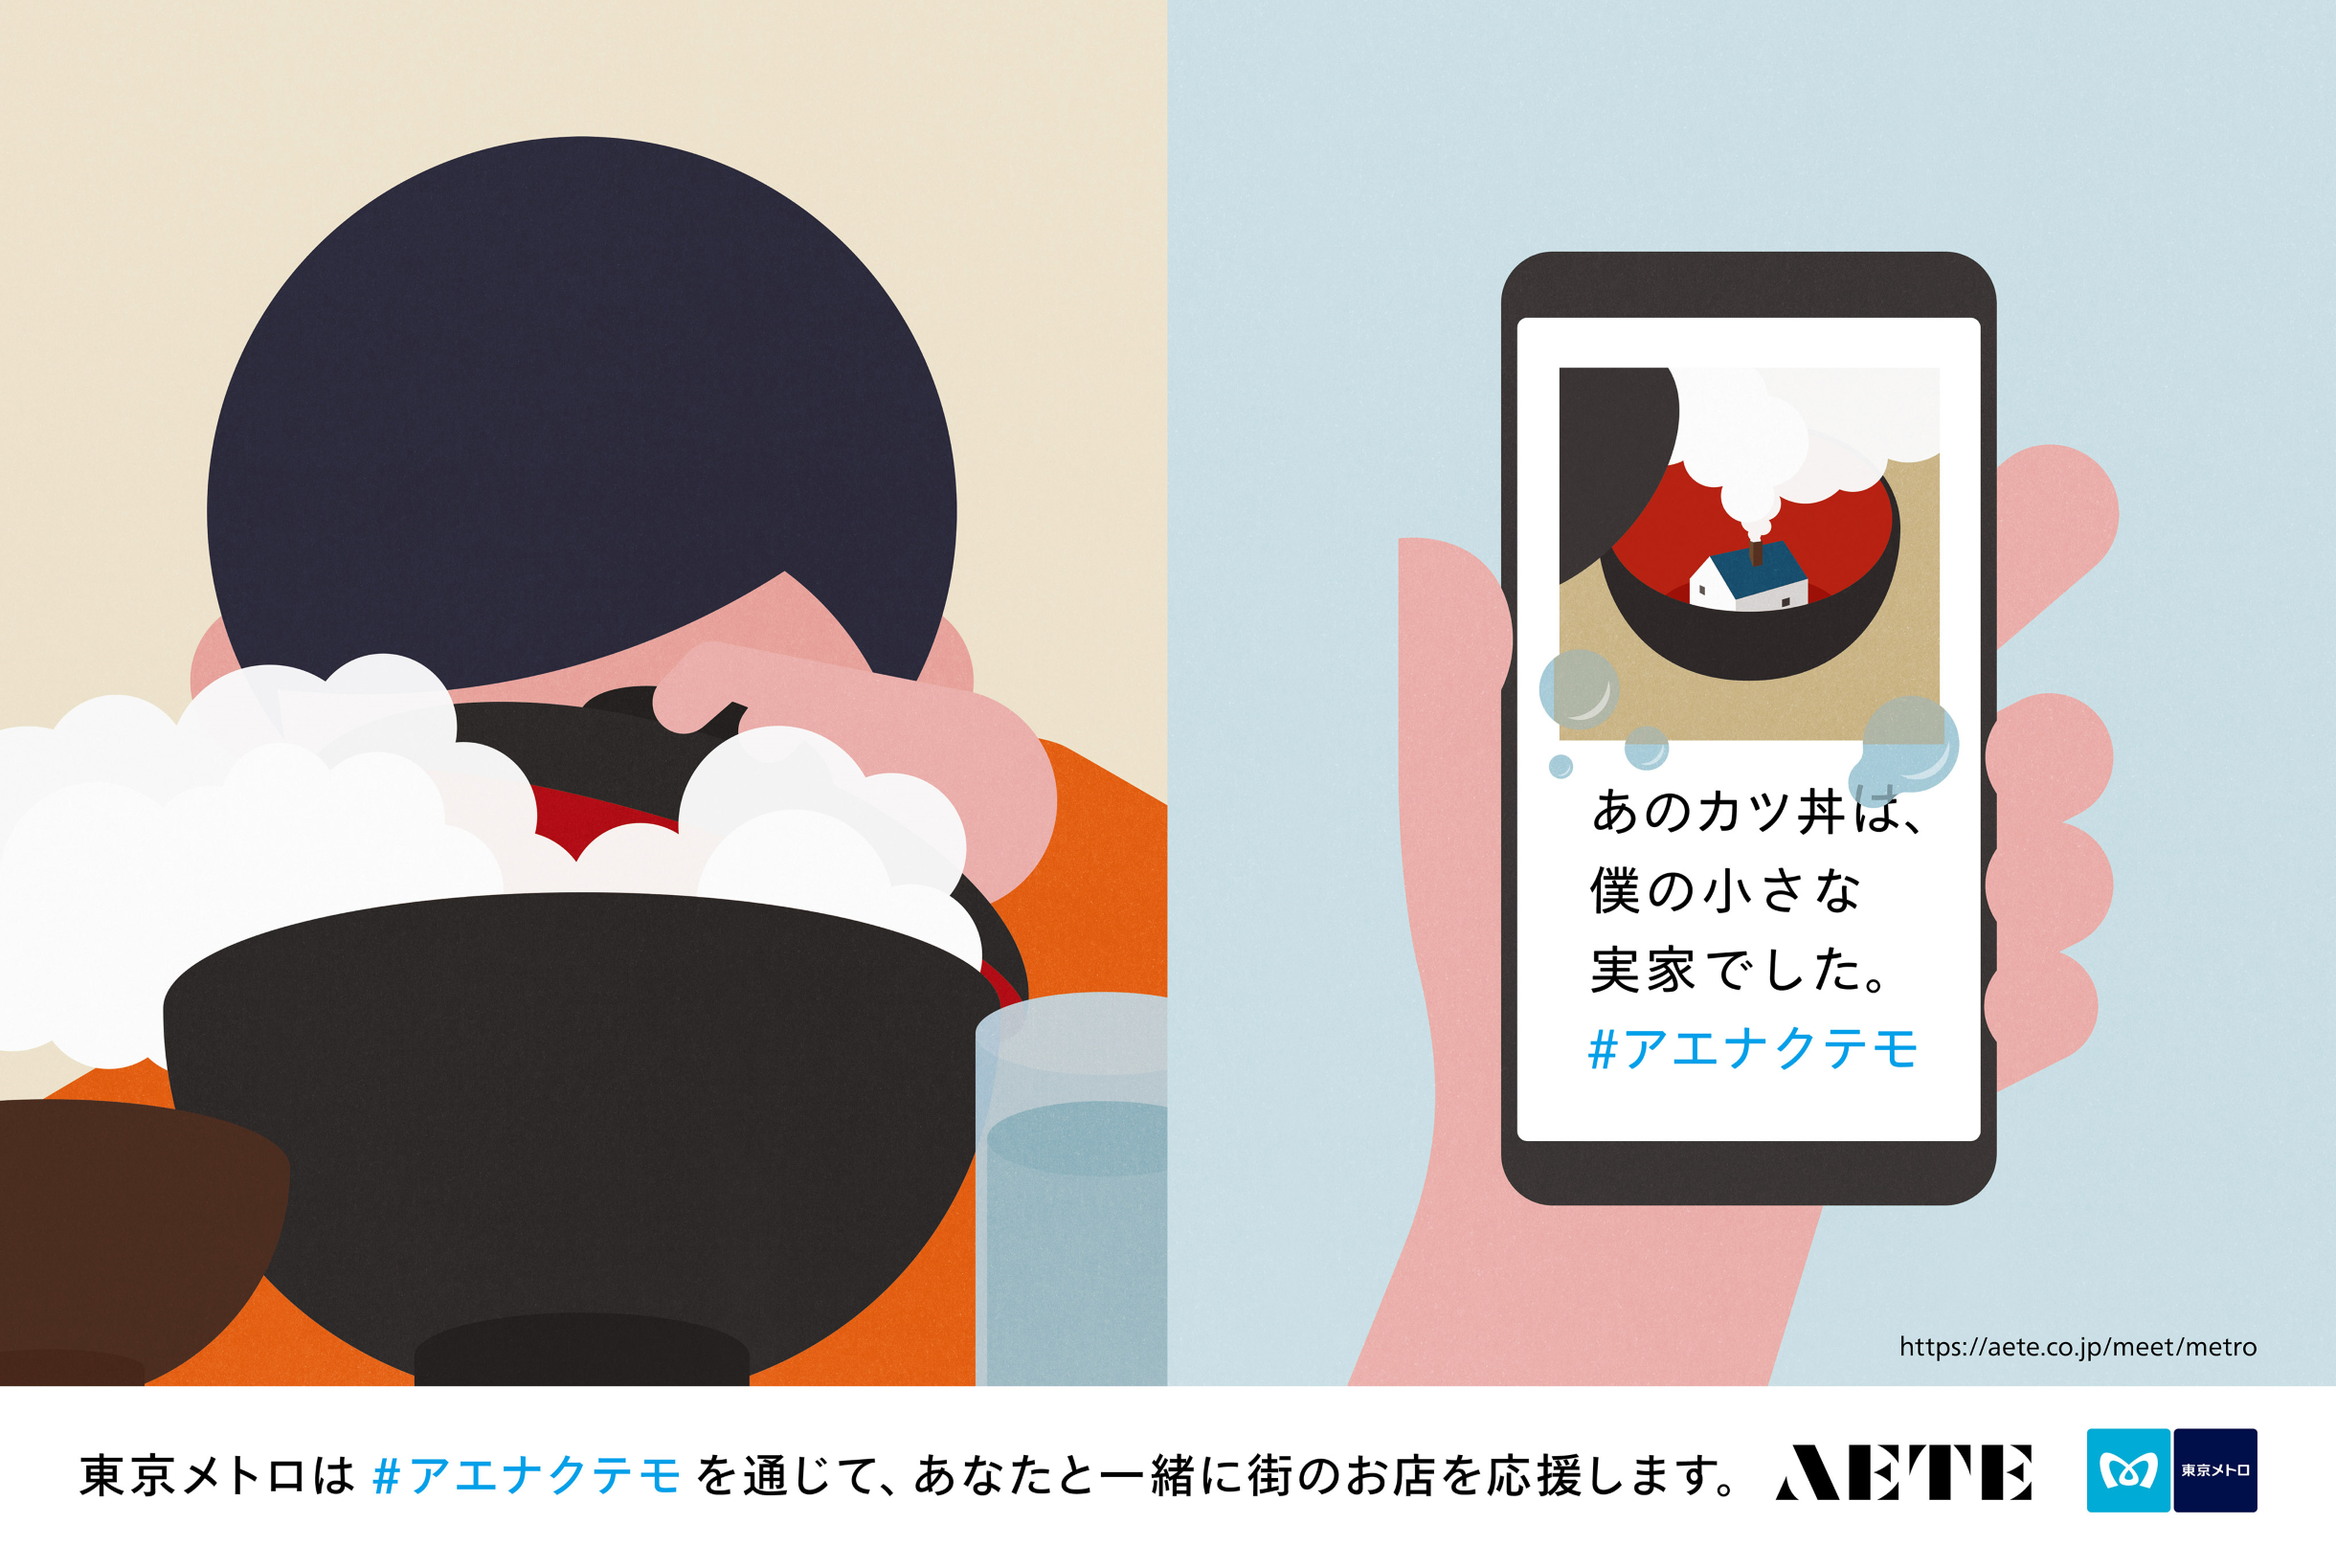 STORY&Co.×東京メトロ 新プロジェクト「#アエナクテモ」キャンペーンを開始